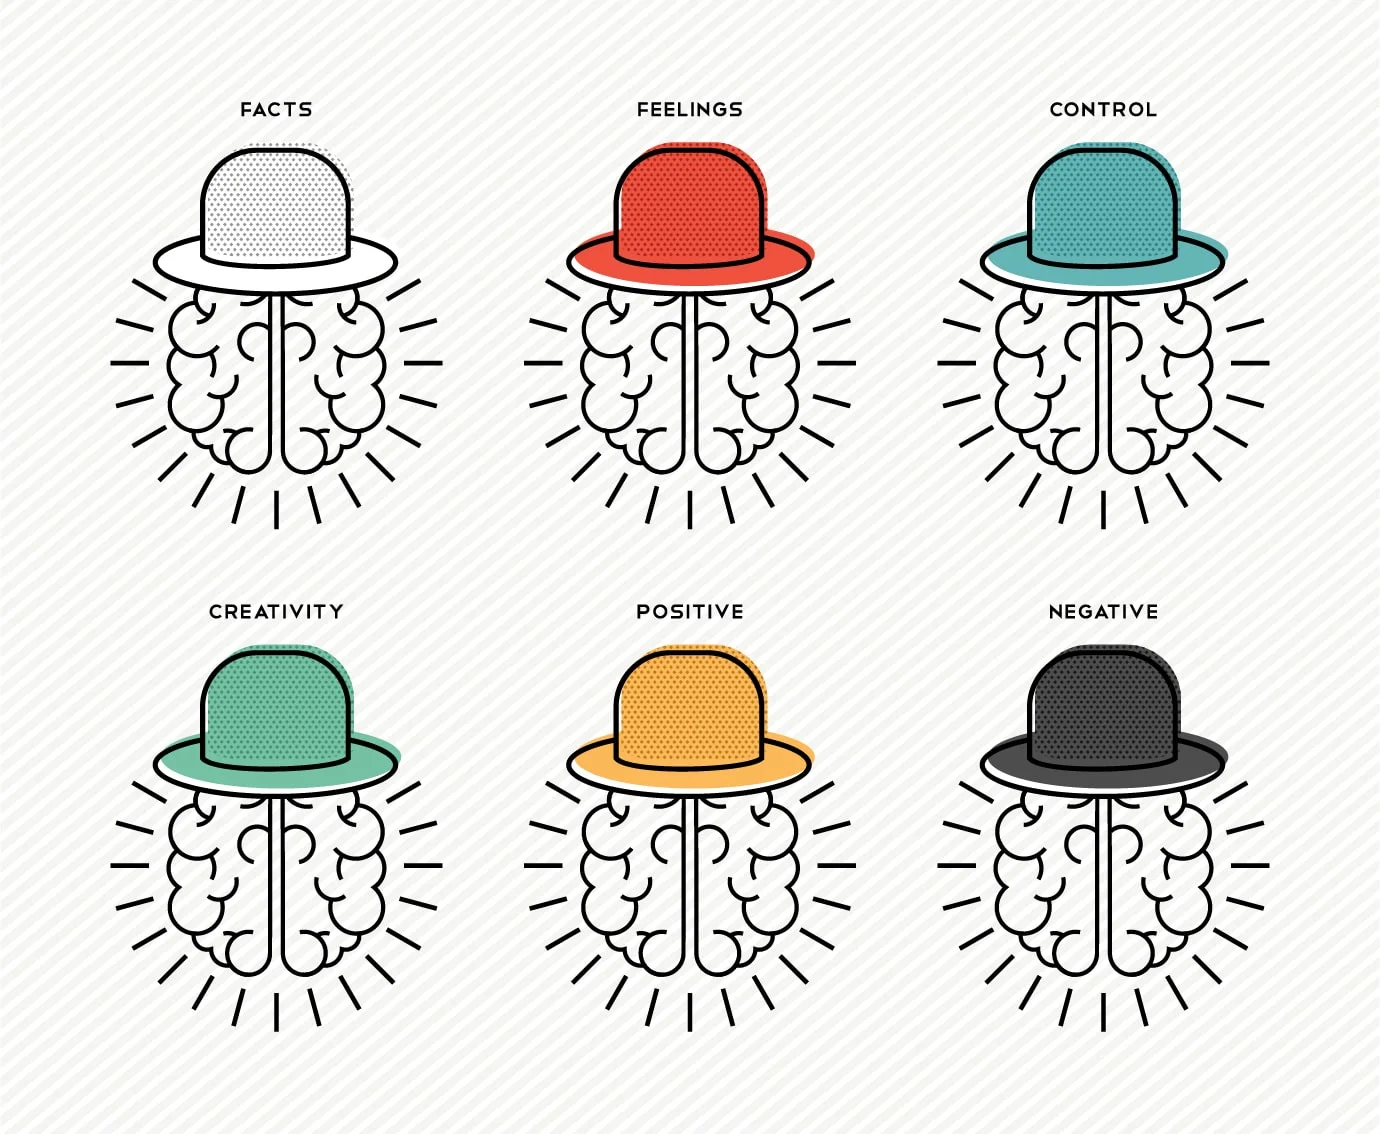 Šest klobouků inspirovaných psychologem Ewardem De Bono